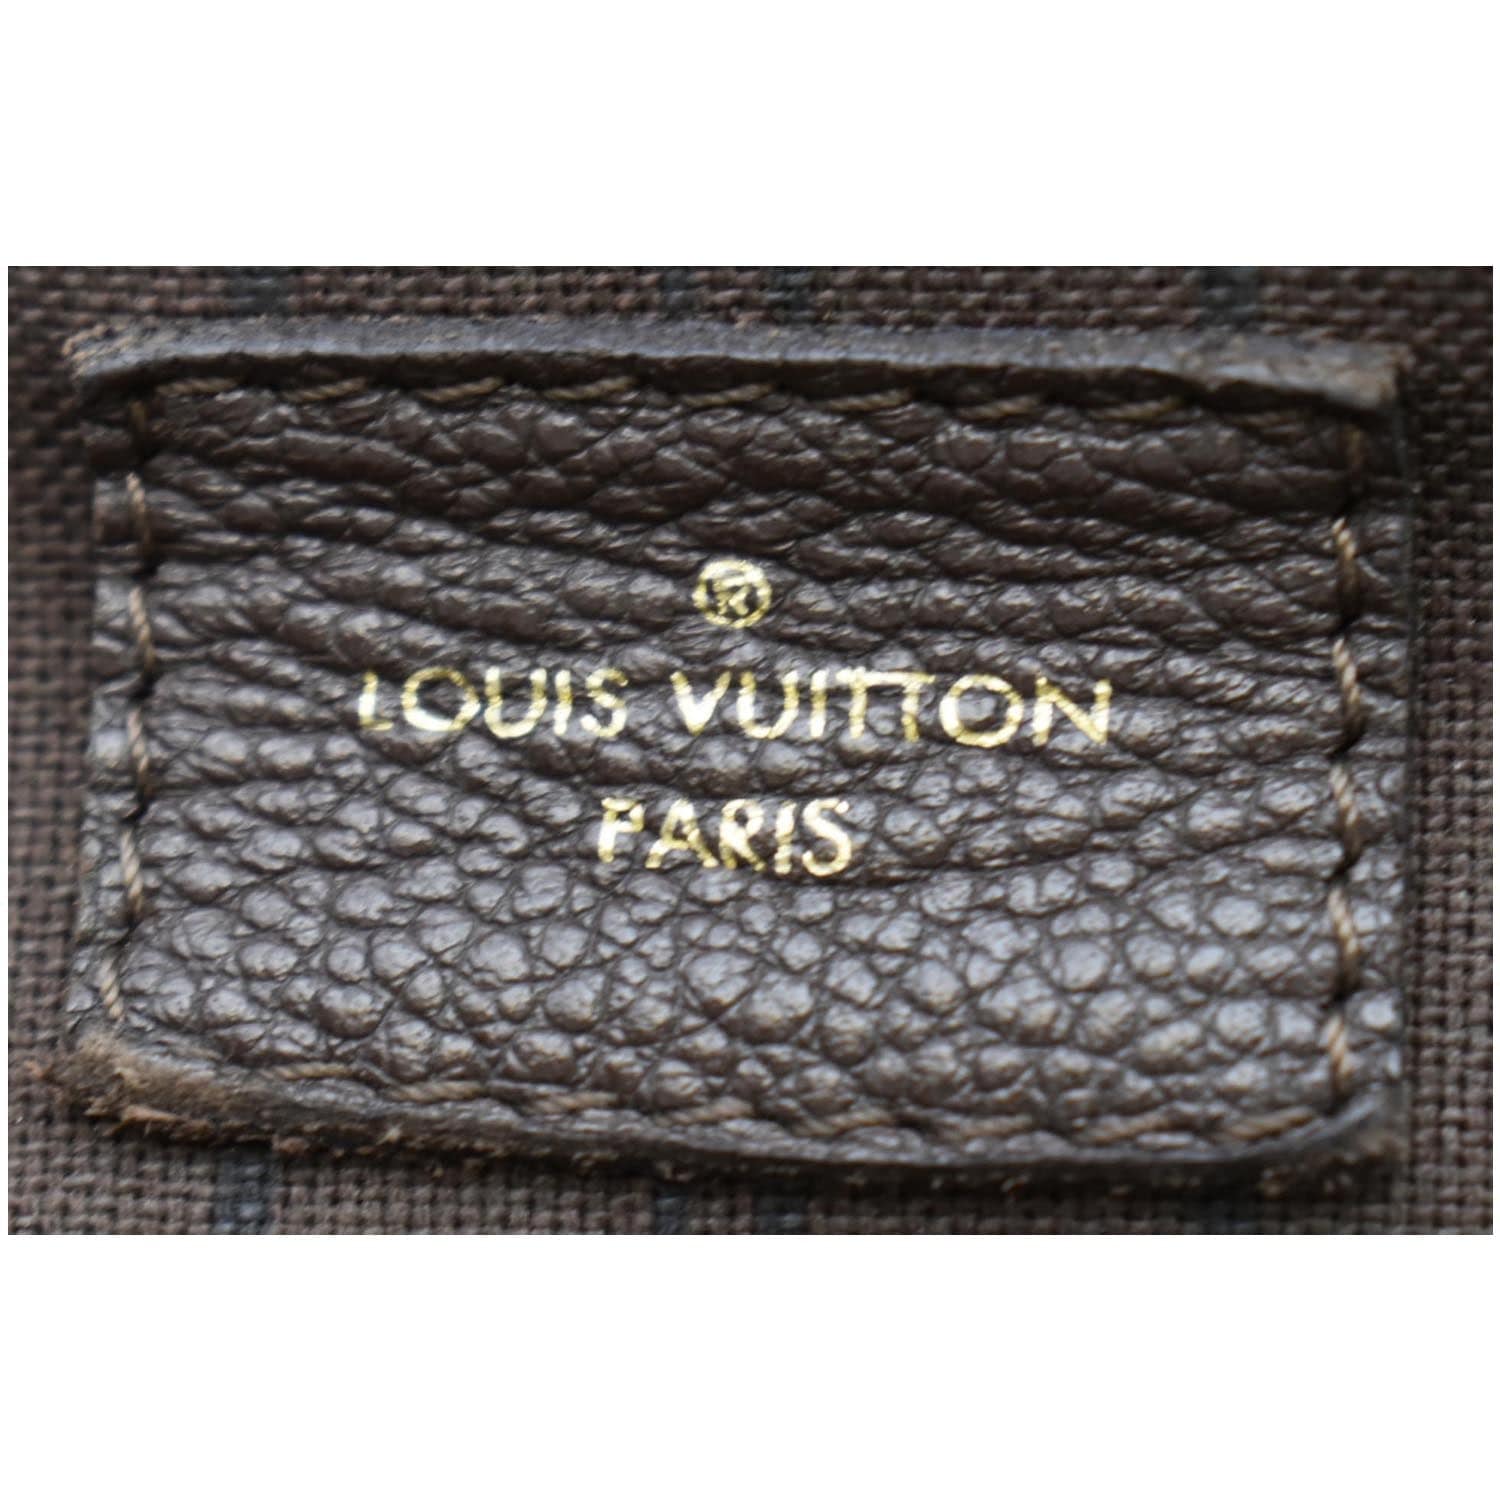 LOUIS VUITTON Speedy 25 Monogram Empreinte Leather Satchel Bag Terre